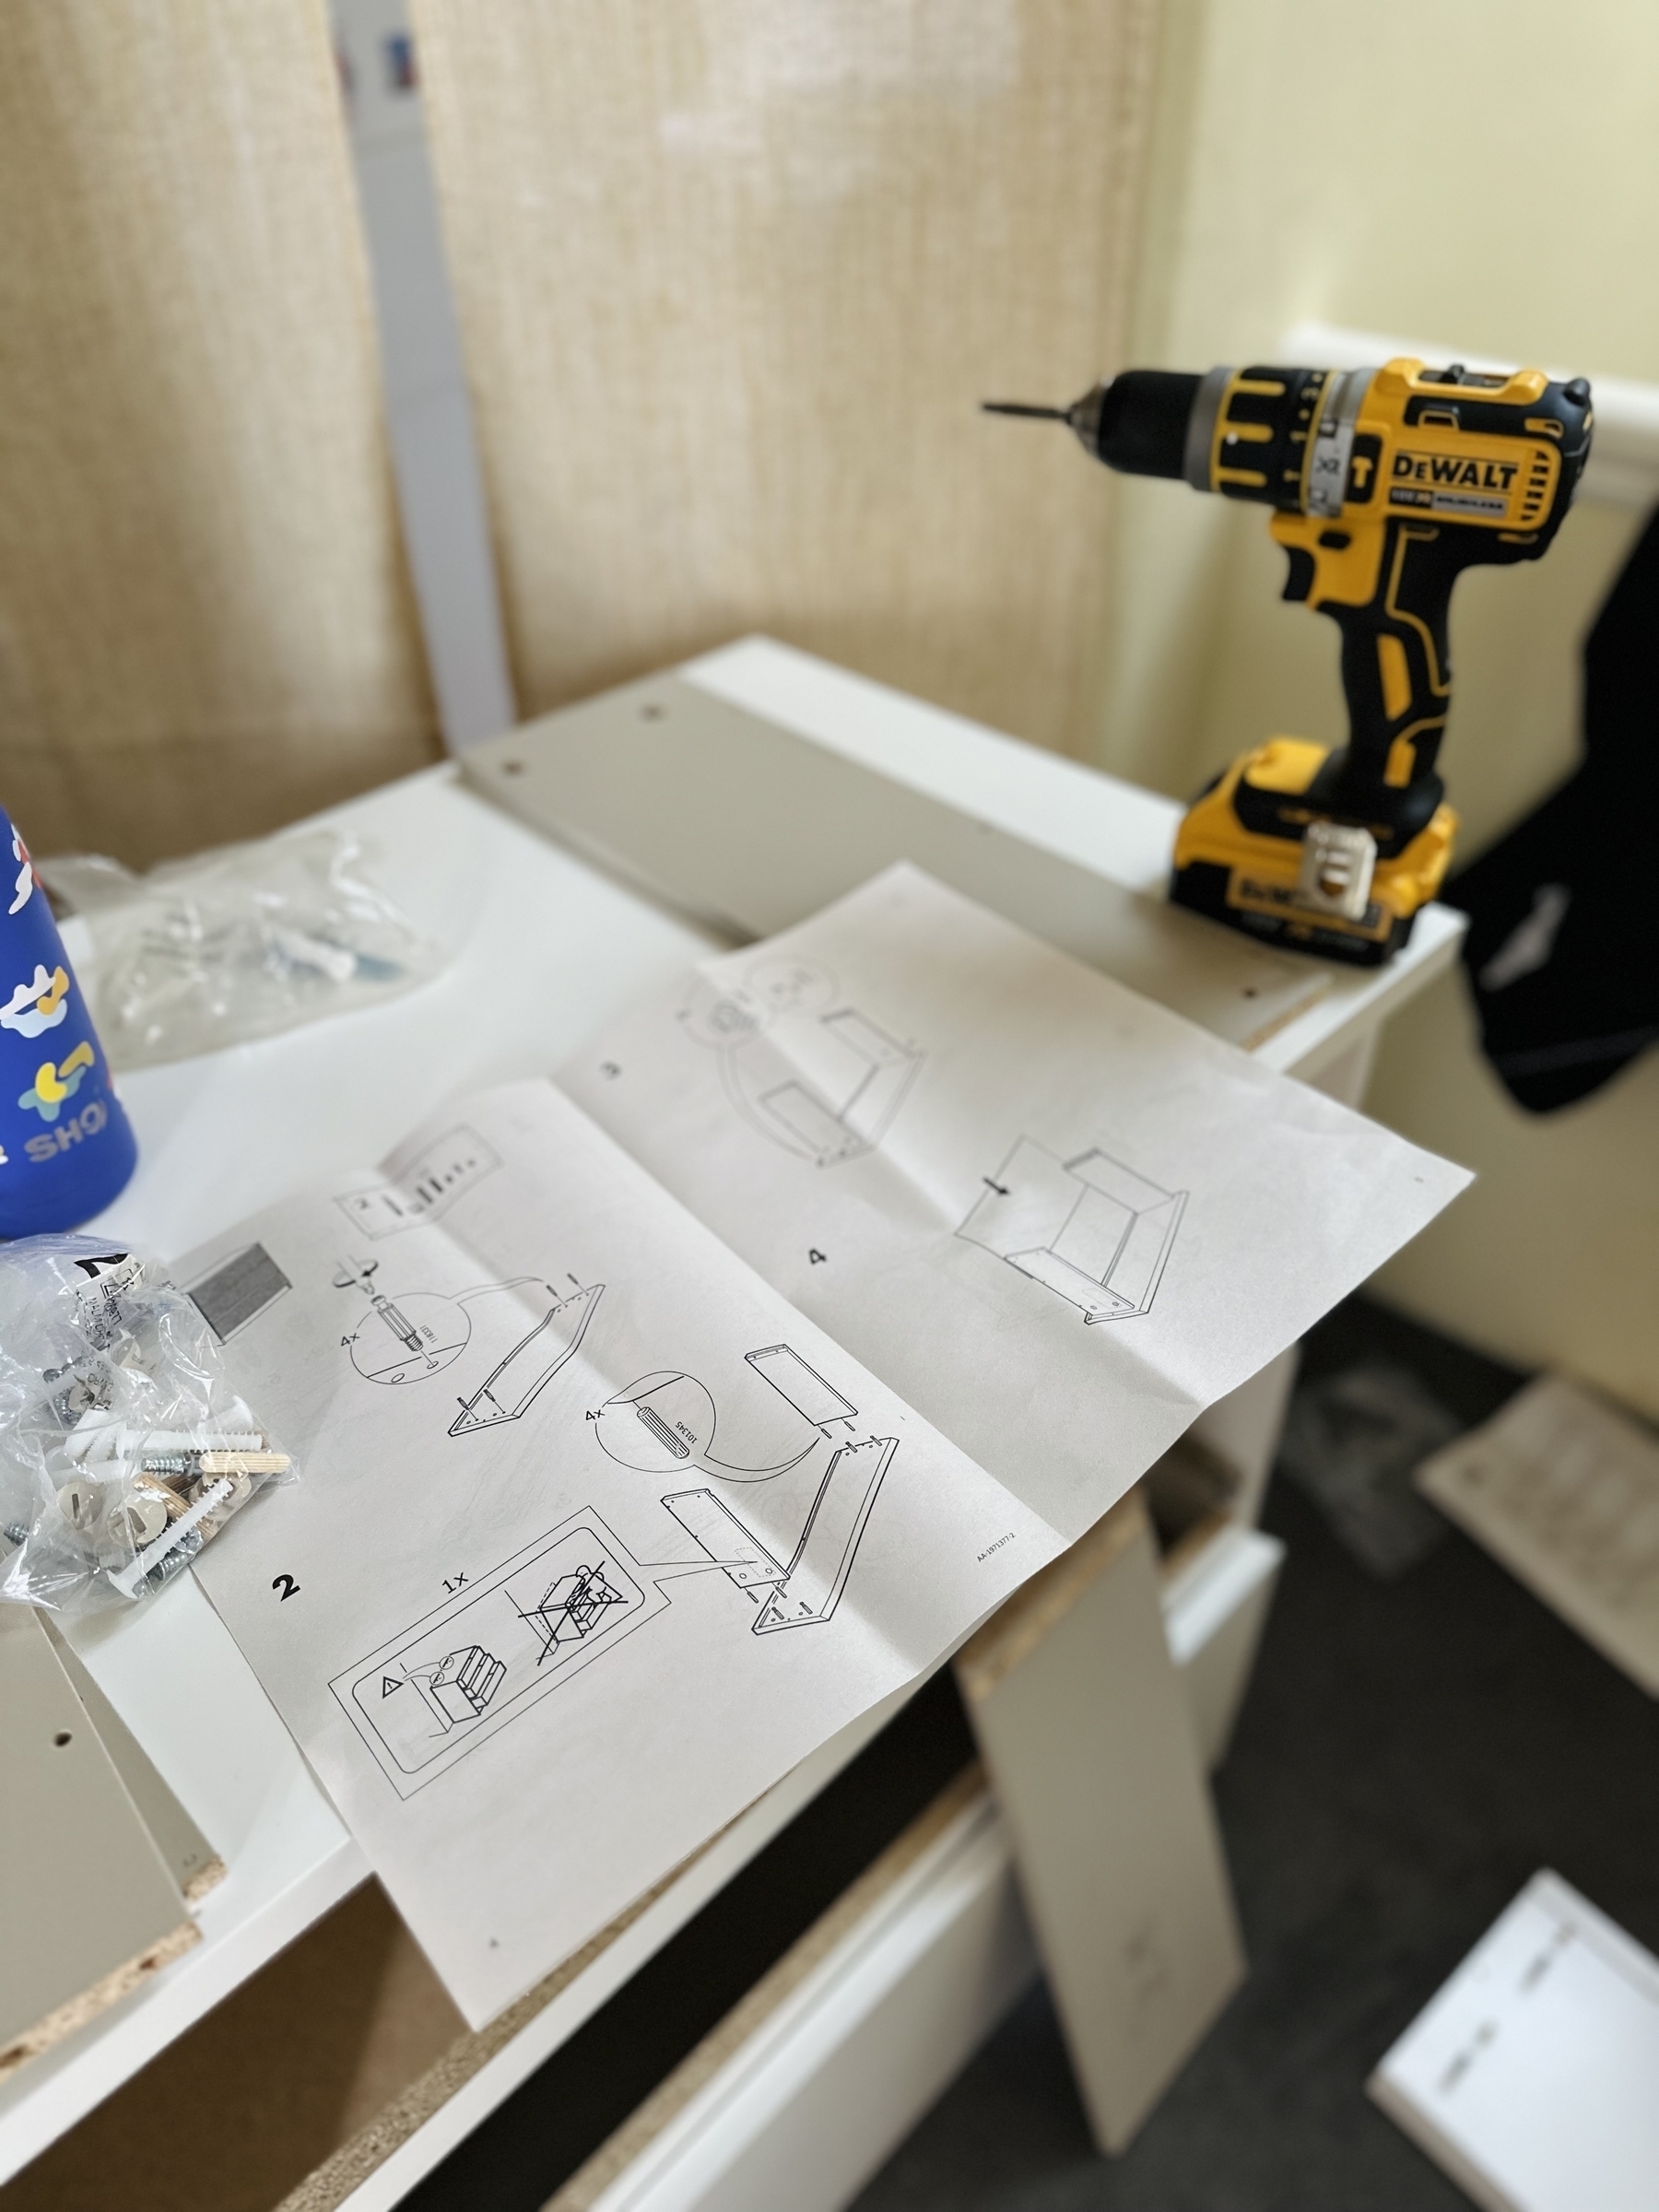 Half built furniture with an Ikea instruction sheet